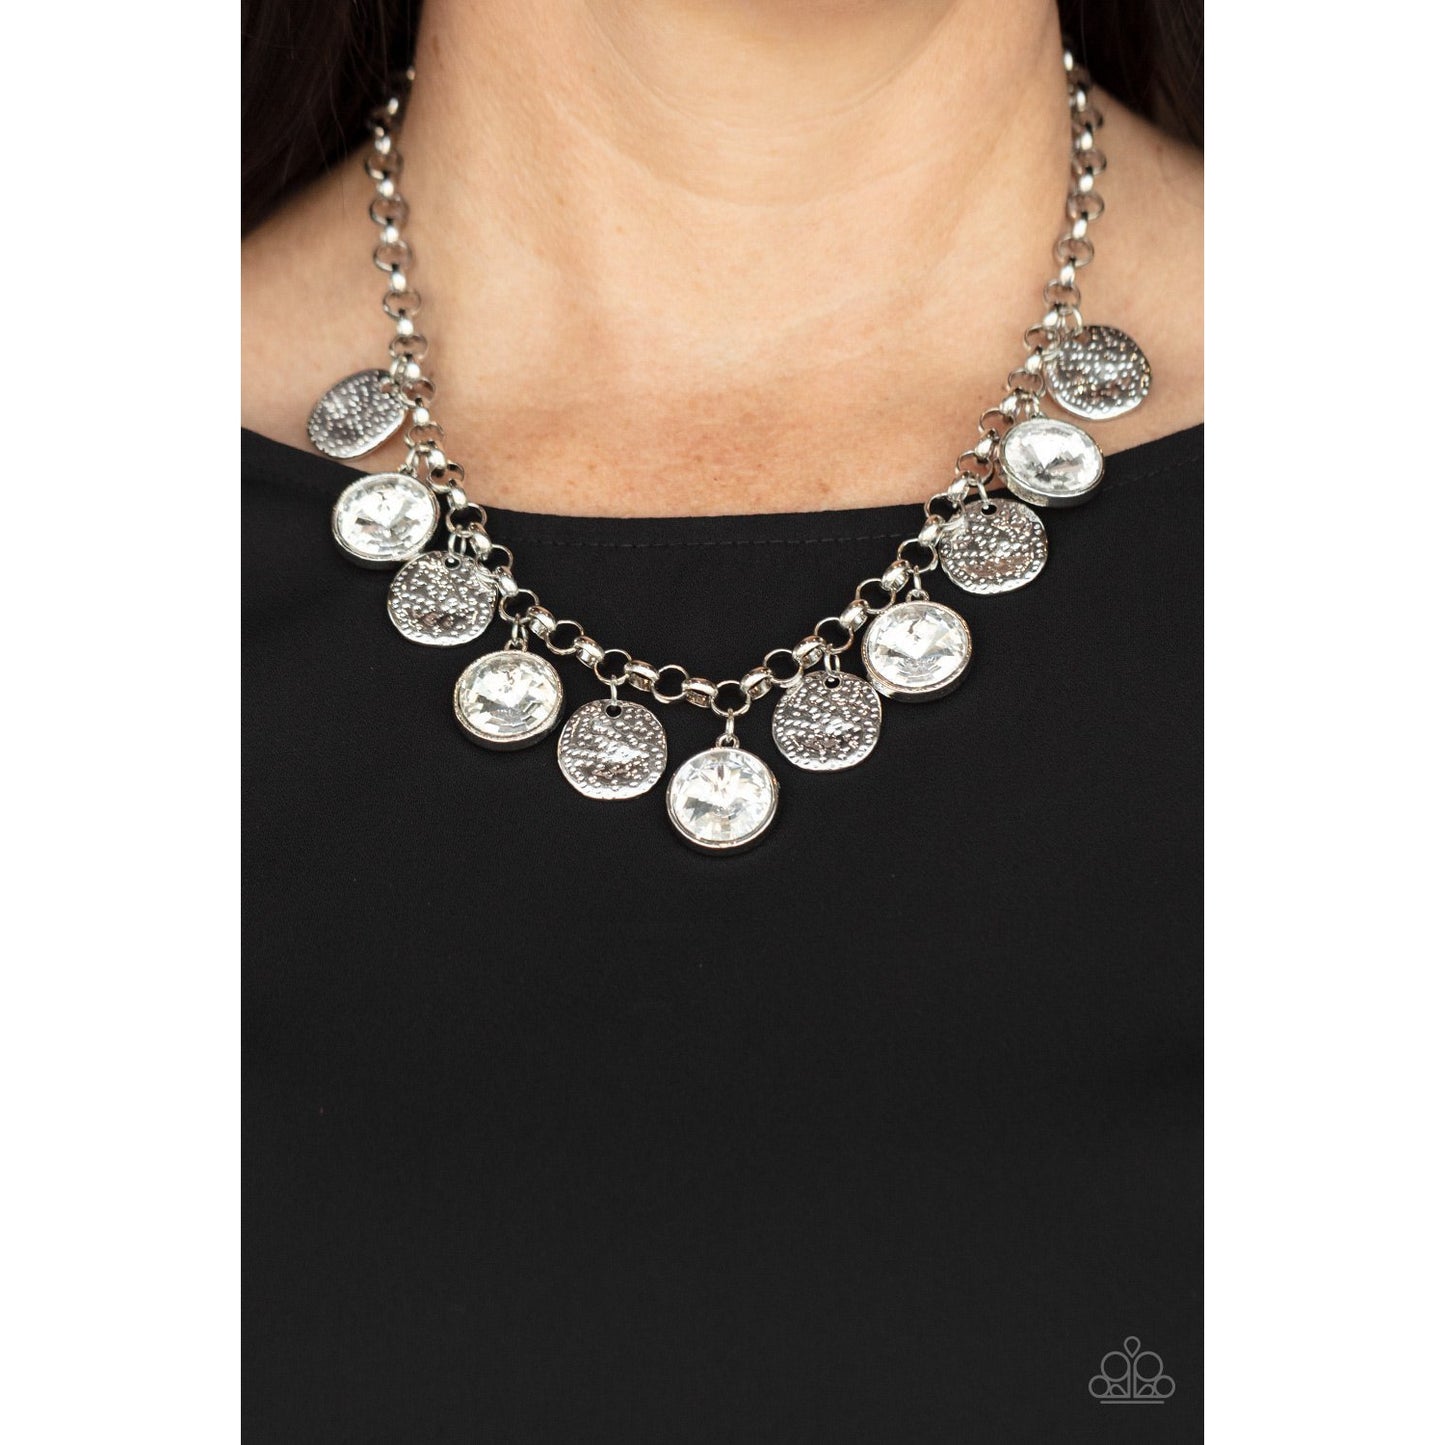 Spot on Sparkle - White Rhinestone Necklace - Paparazzi Accessories - GlaMarous Titi Jewels